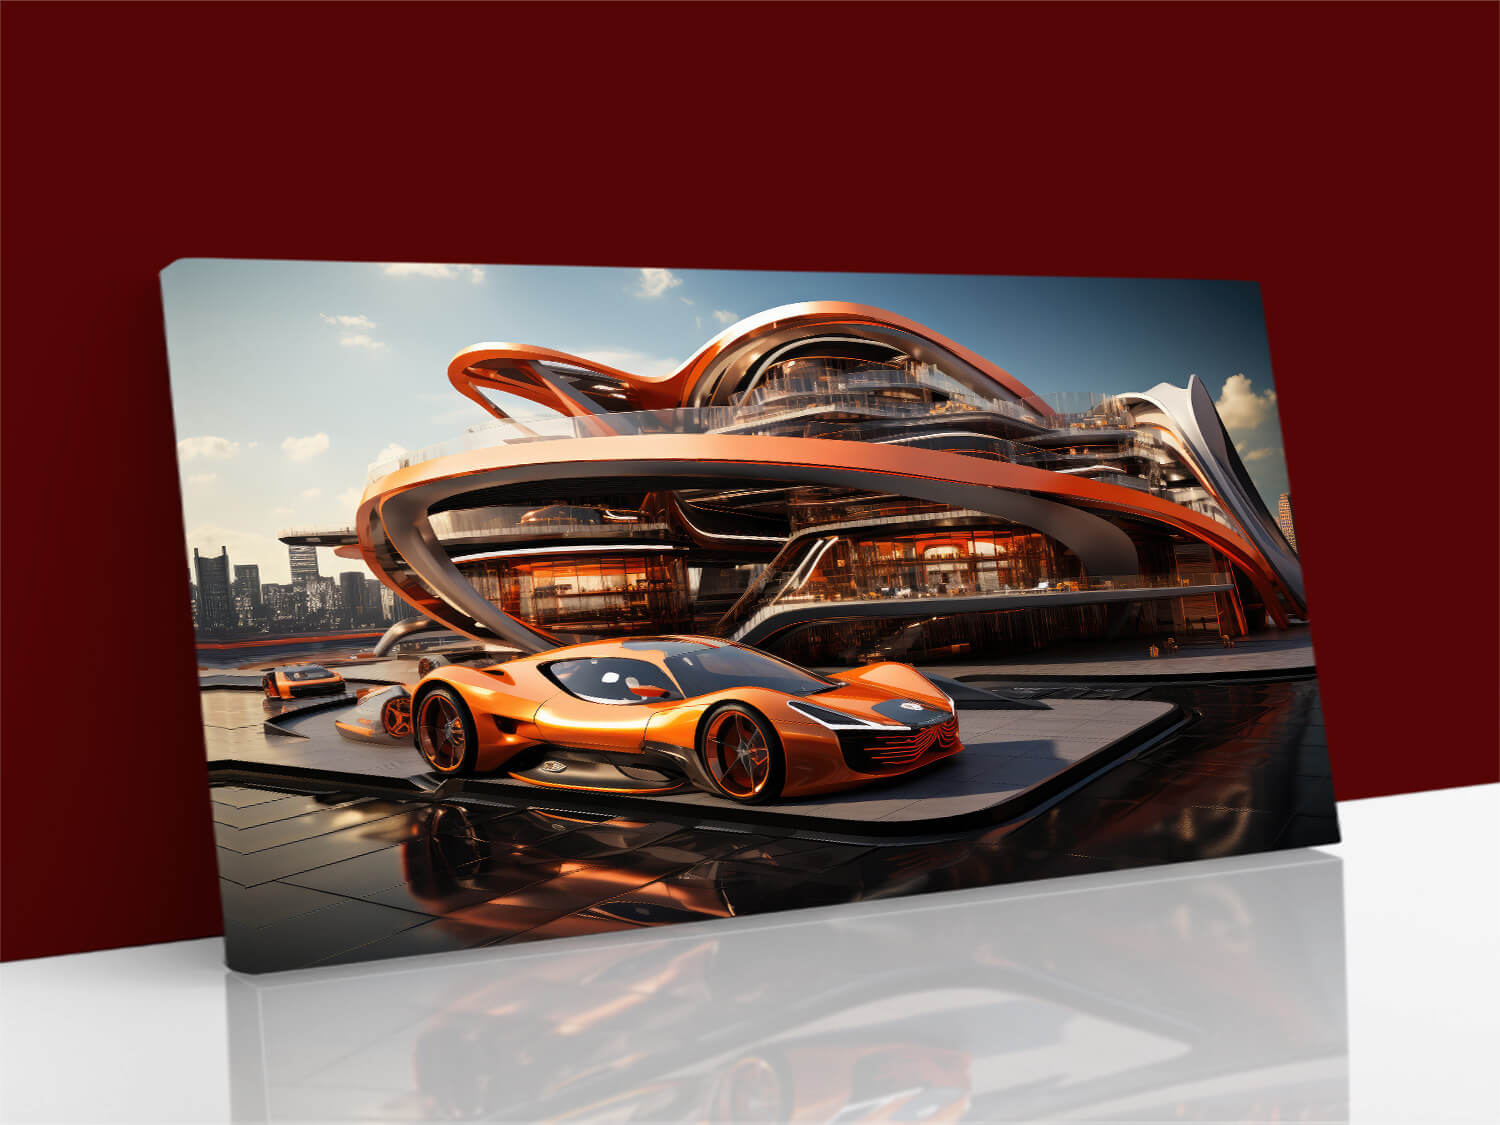 N1__56429438_Futuristic Sports Car On Neon Acceleration Of a Supercar AOA14023